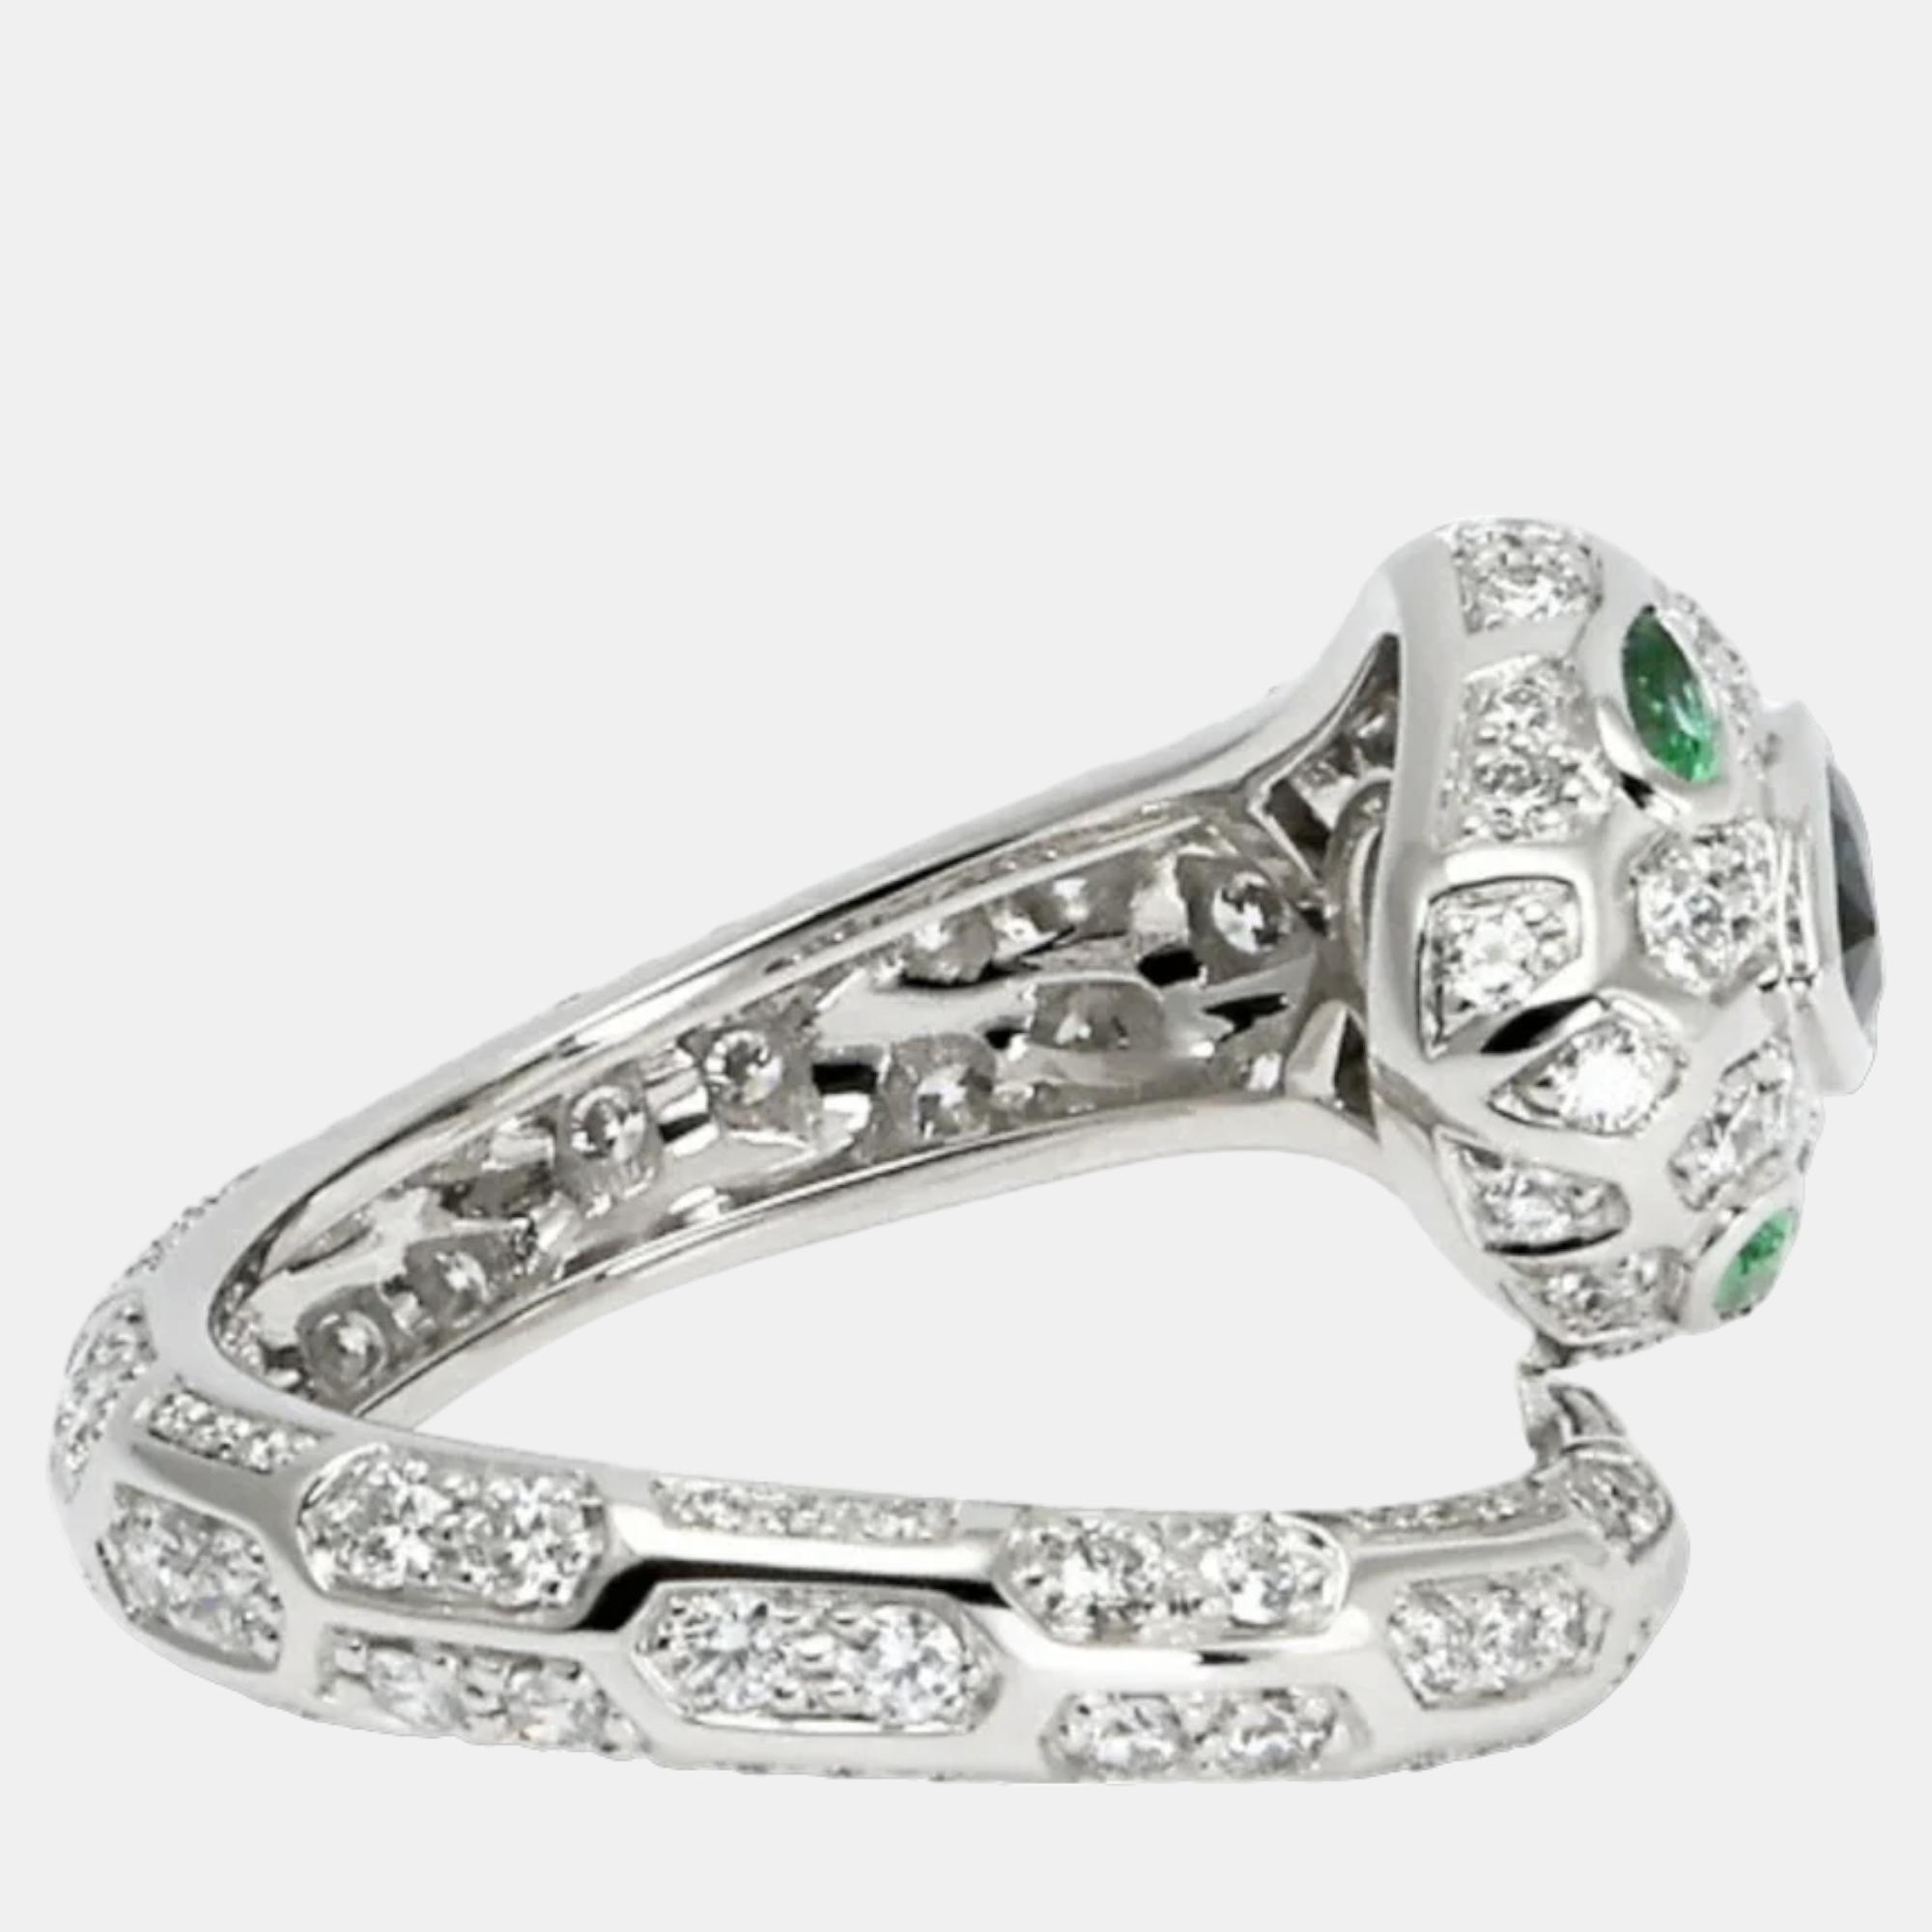 Bvlgari Serpenti 18K White Gold Diamond Sapphire And Emerald Ring EU 52